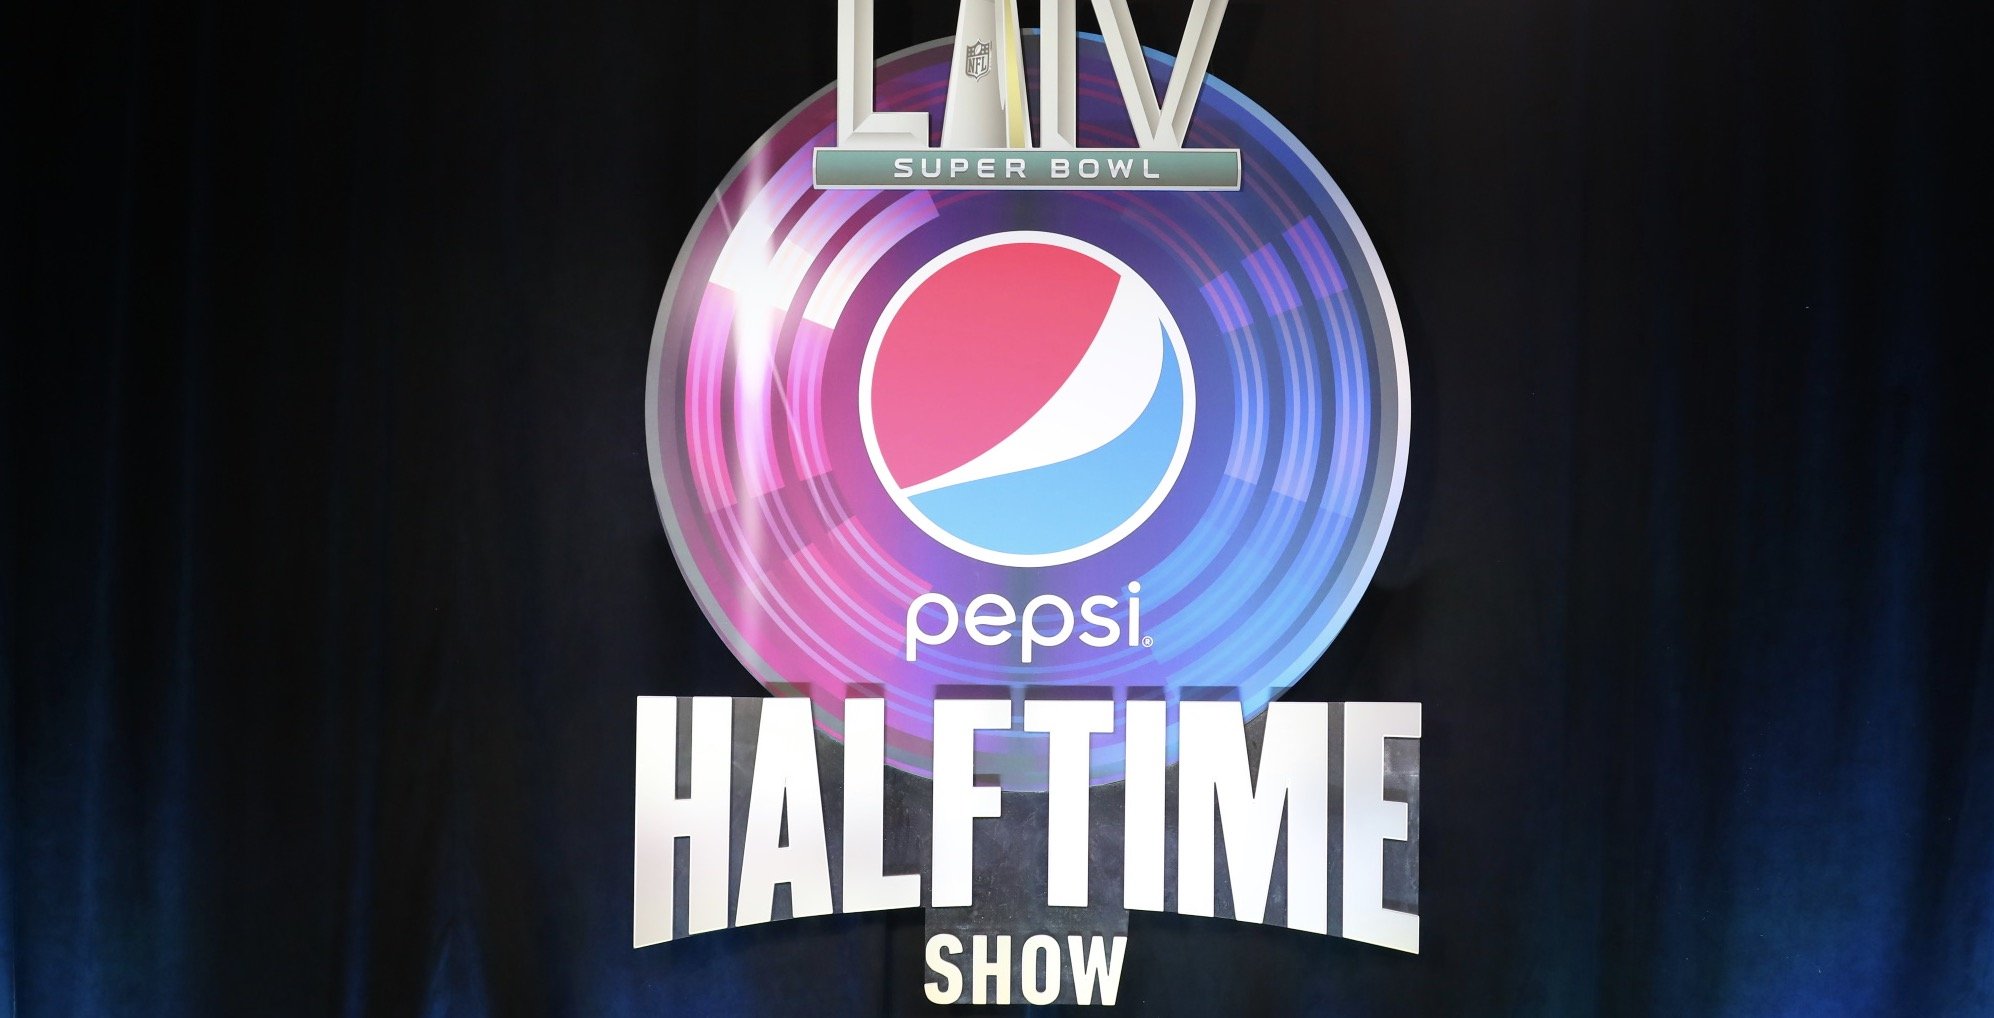 Super bowl show. Super Bowl Halftime show логотип. Halftime show logo. Super Bowl Liv Halftime show. Pepsi super Bowl.